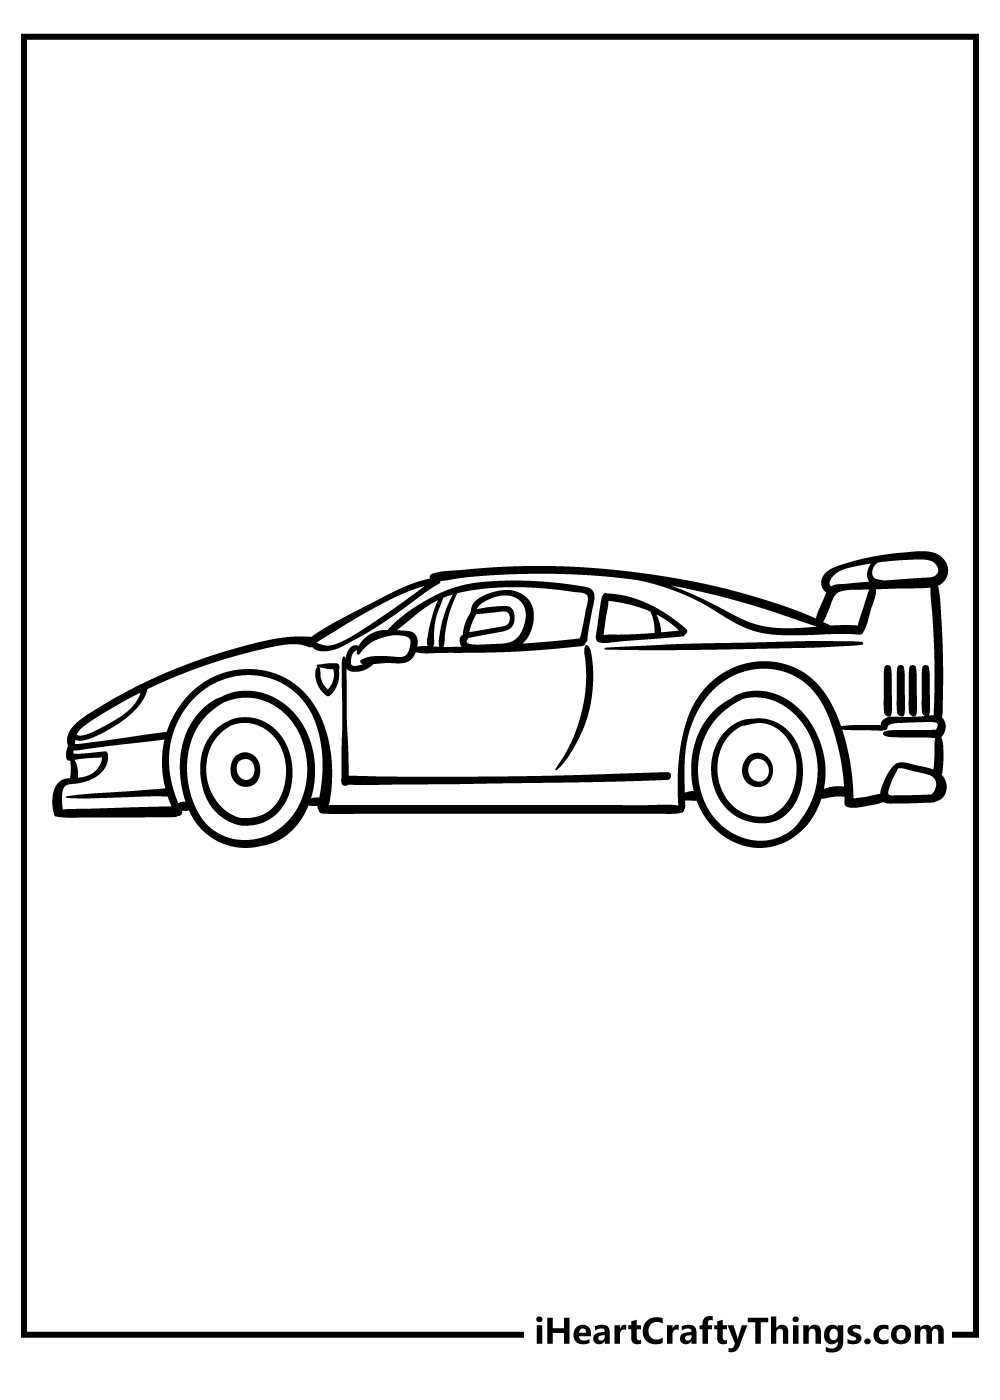 Race Car Coloring Original Sheet for children free download